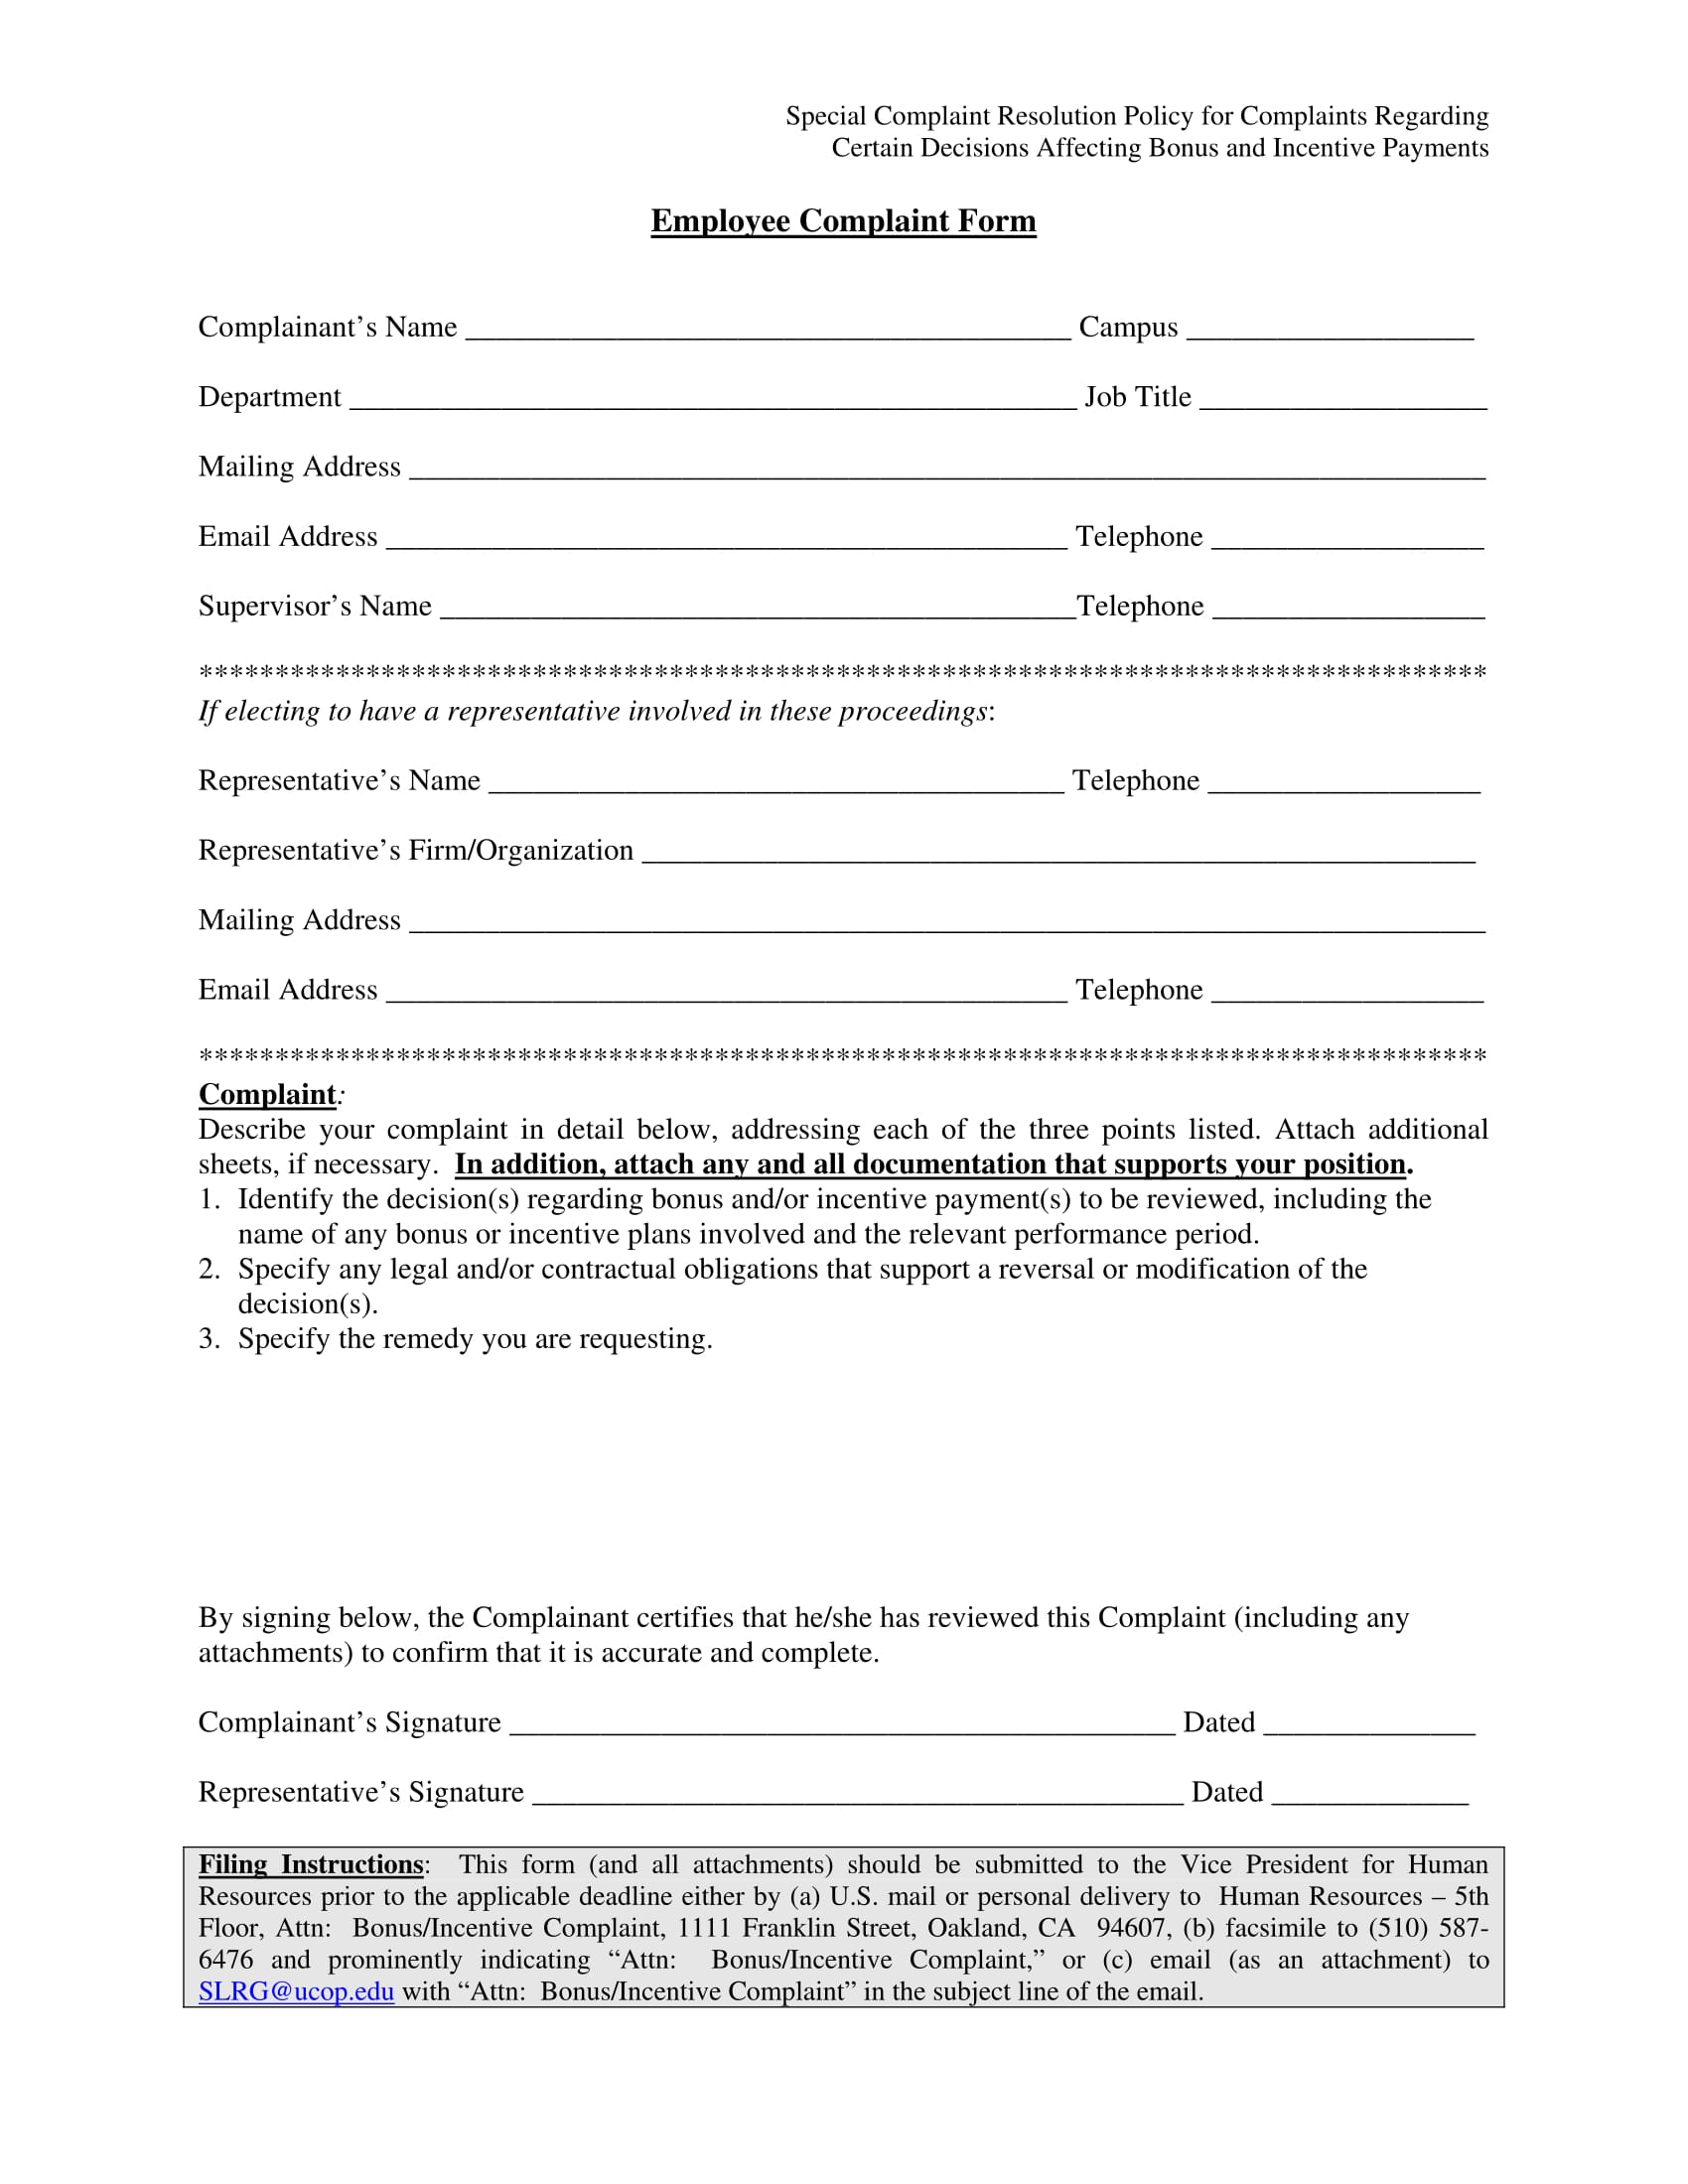 employee complaint form 1